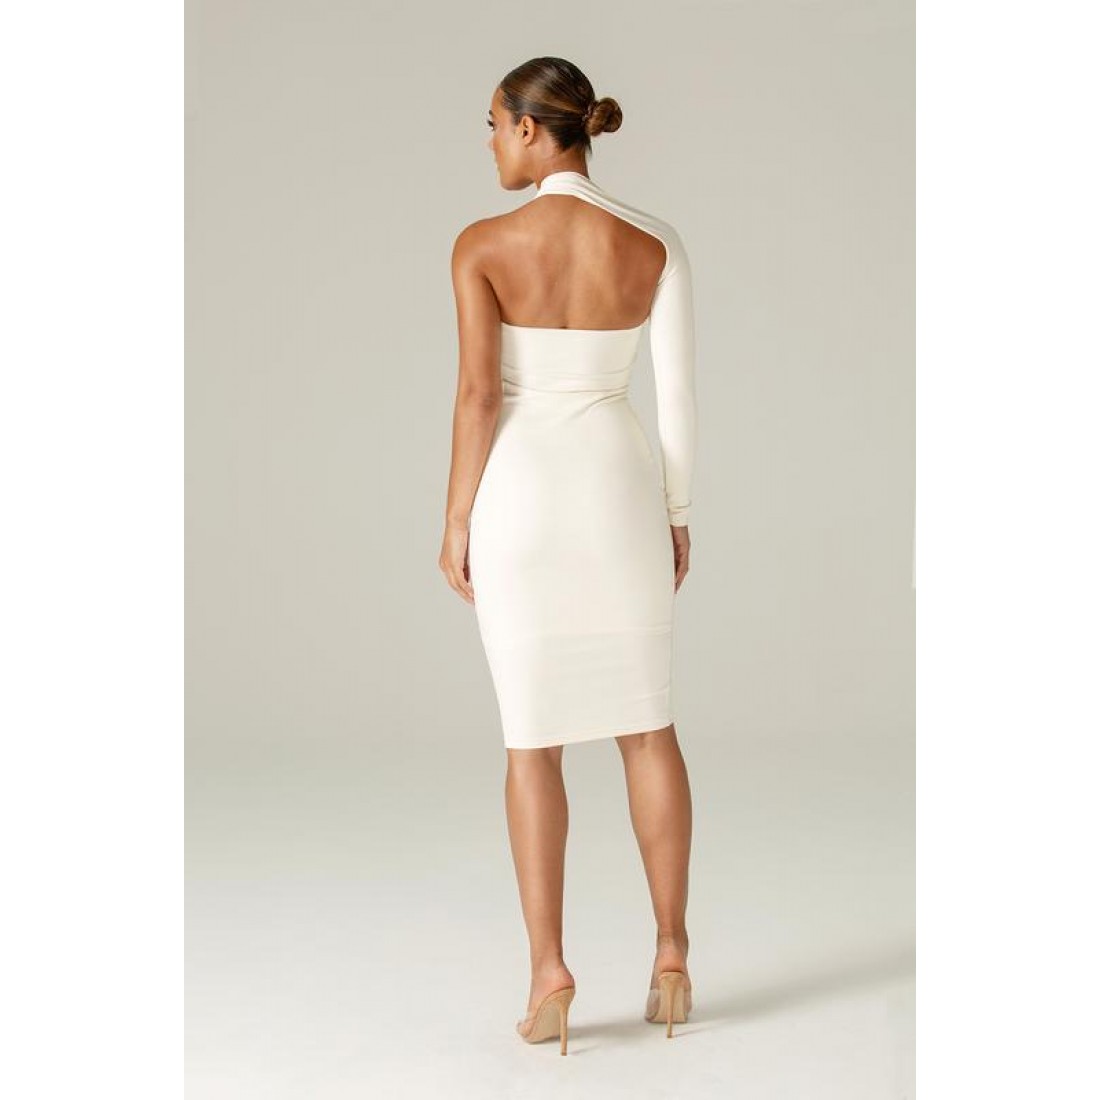 100% authentic Alieva Discount - Dasha Modern Dress (Off White) sells ...